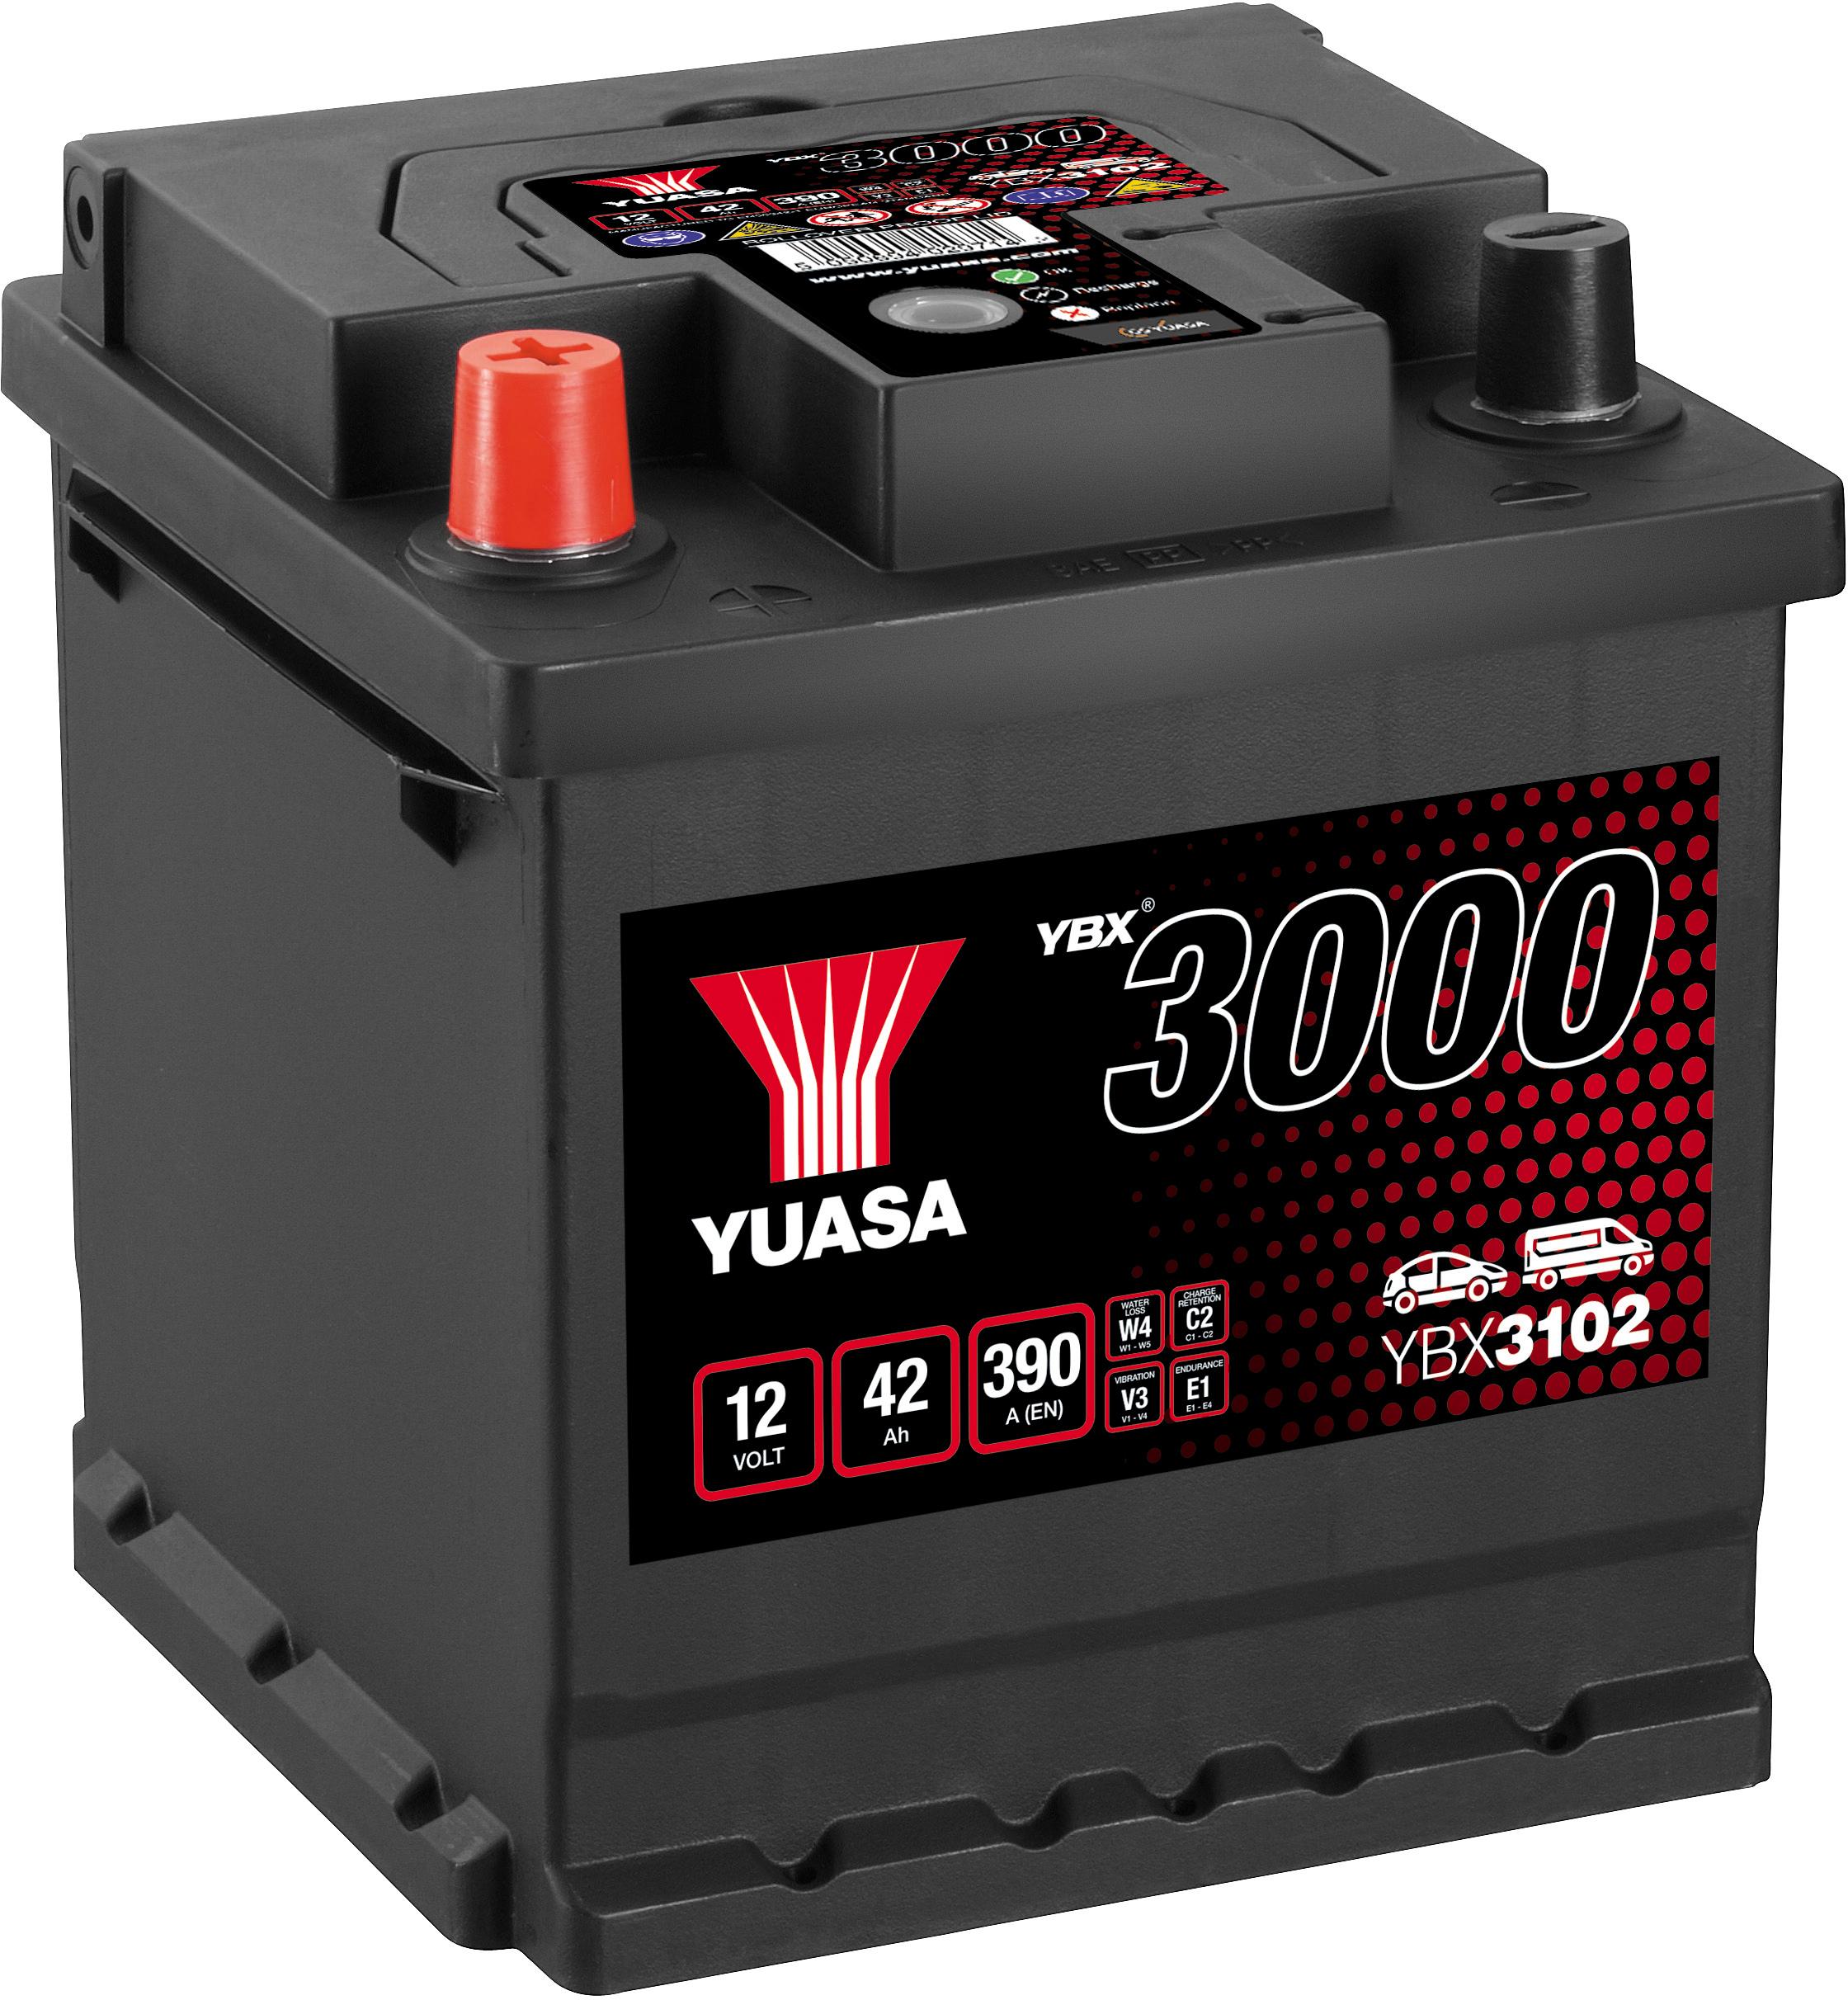 Ybx3102 12V 42Ah 390A Yuasa Smf Battery